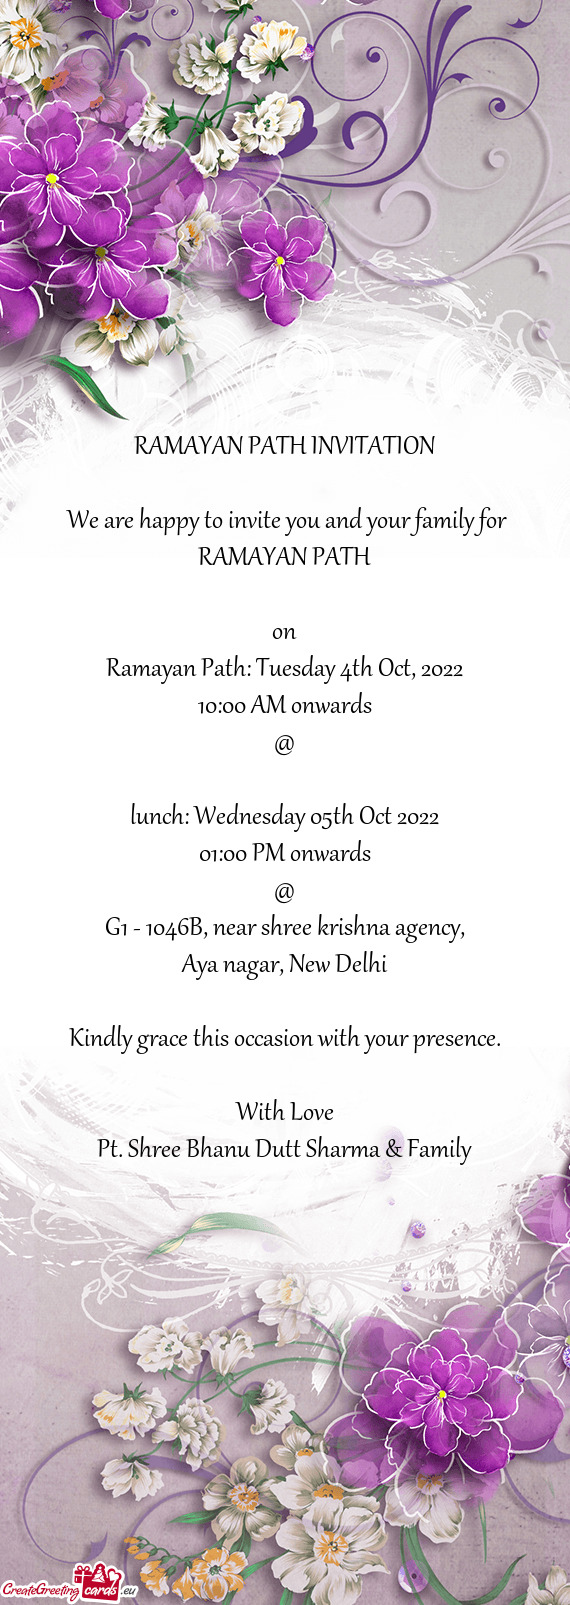 Ramayan Path: Tuesday 4th Oct, 2022